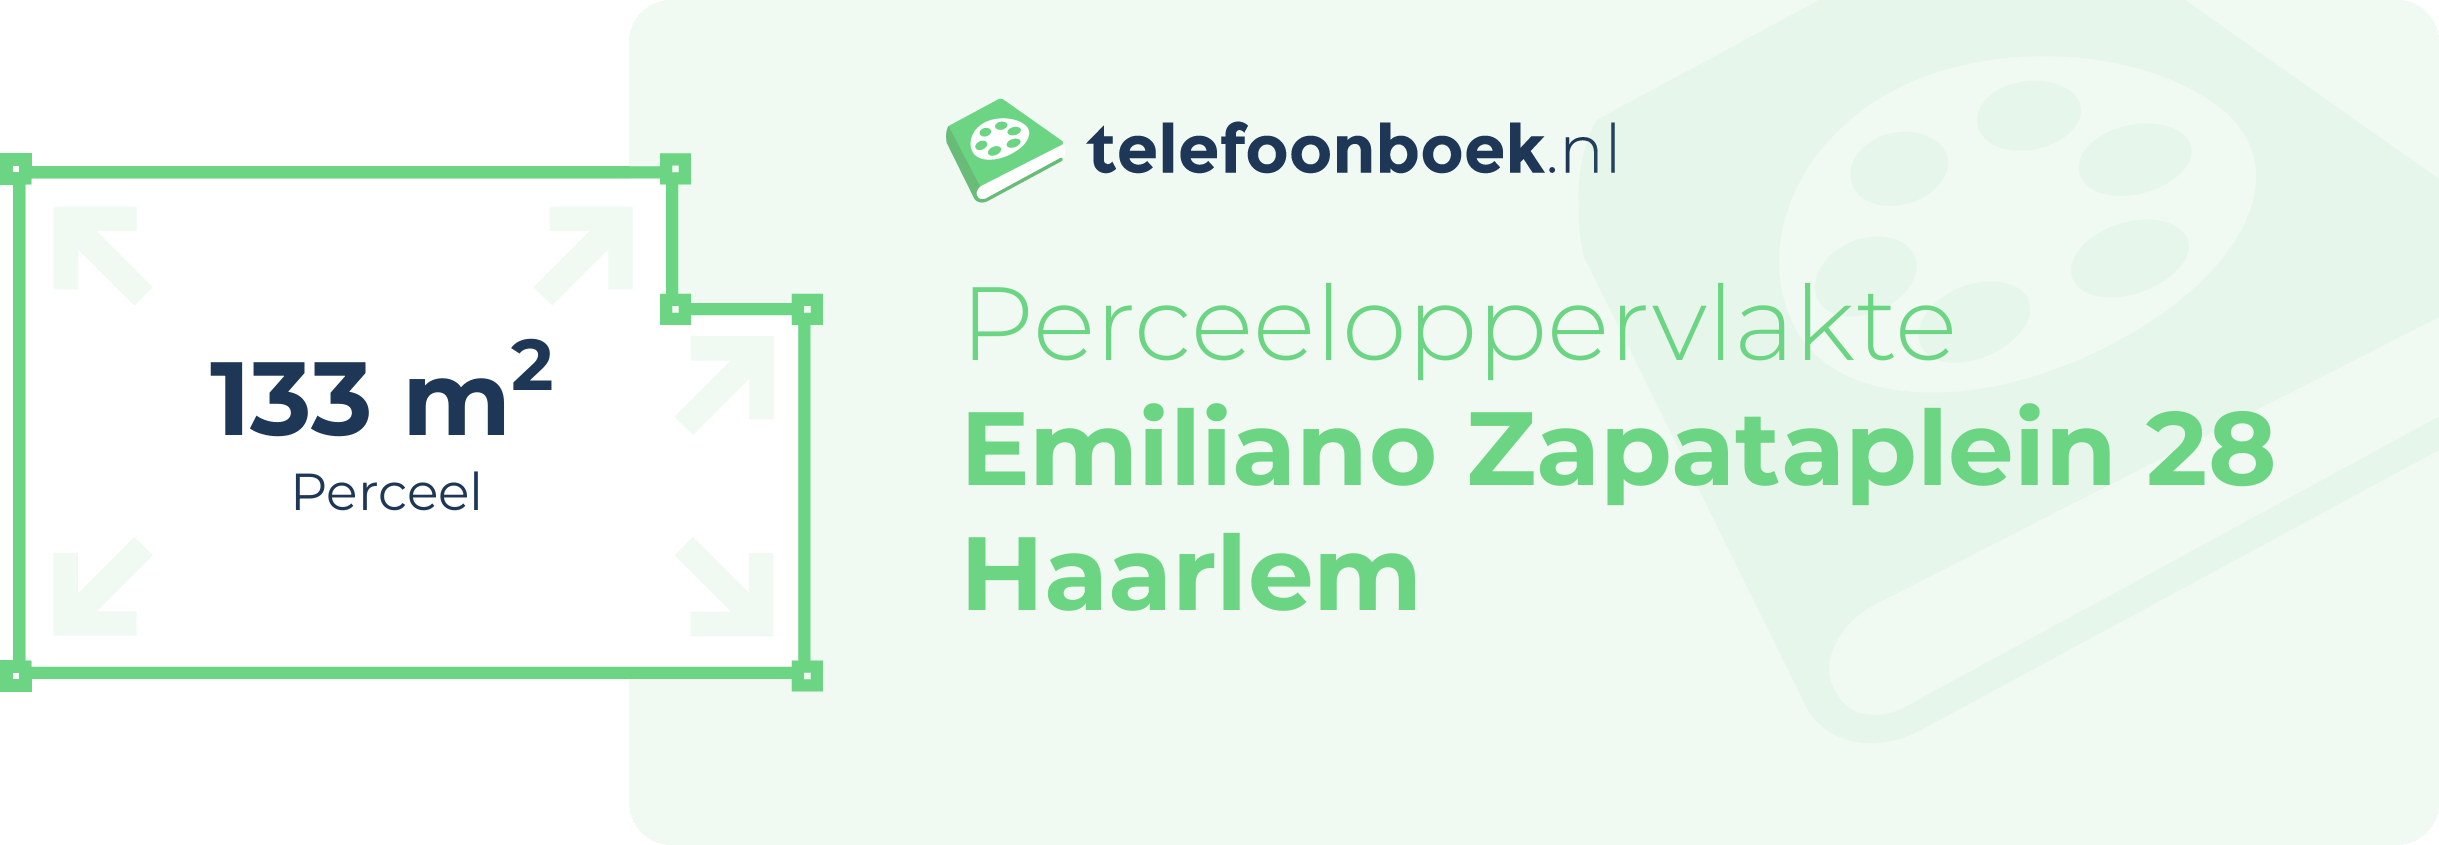 Perceeloppervlakte Emiliano Zapataplein 28 Haarlem